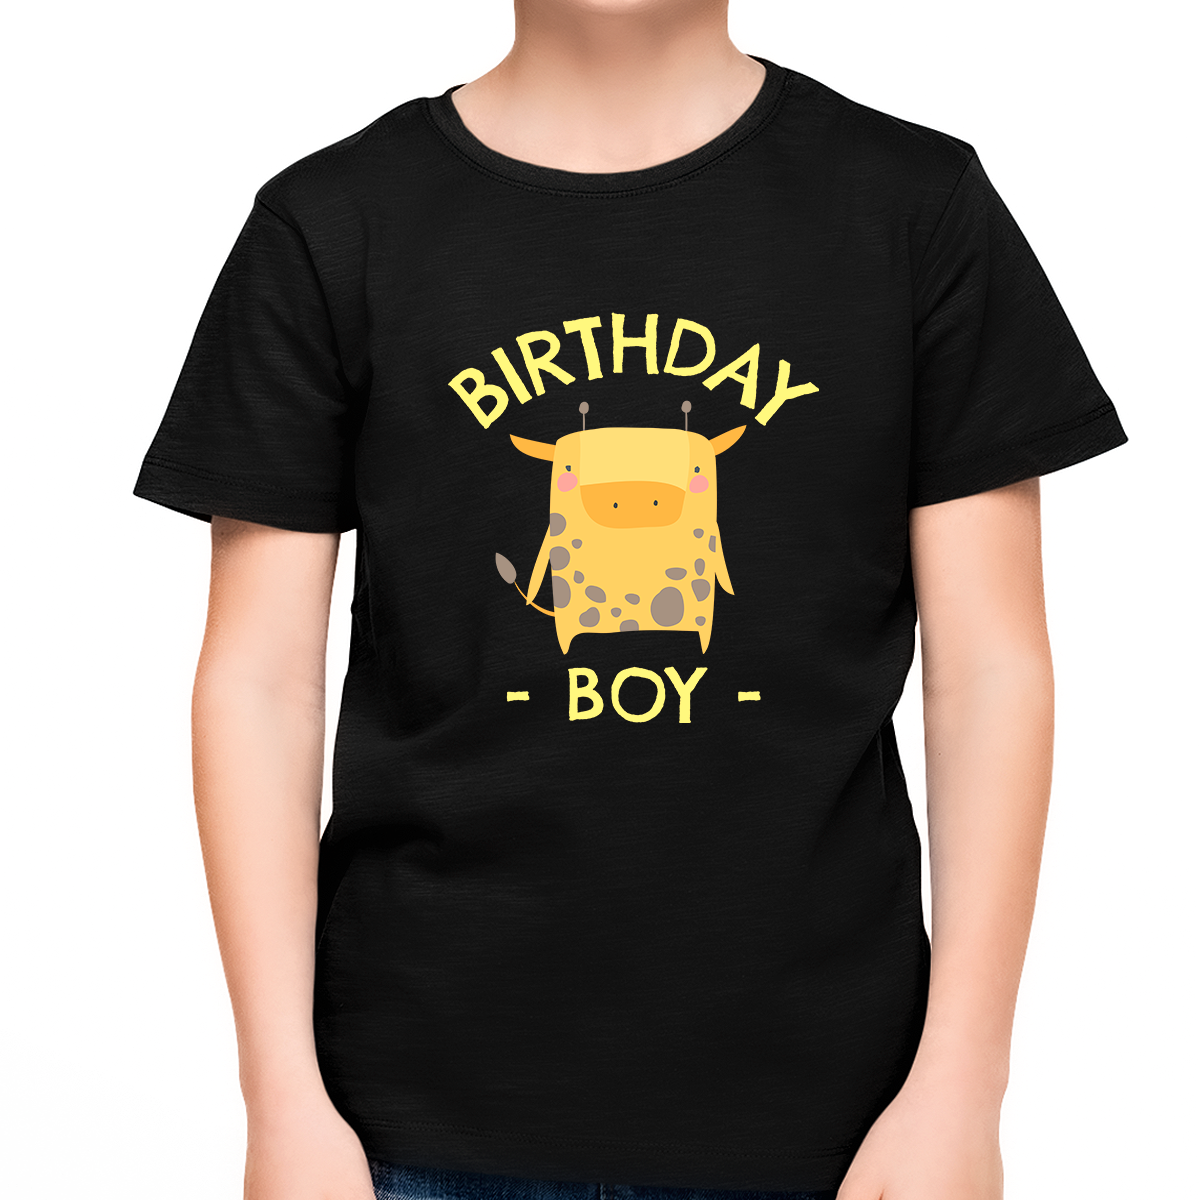 Birthday Boy Shirt Funny Birthday Shirt Baby Cow Birthday Shirt Birthday Boy Outfit